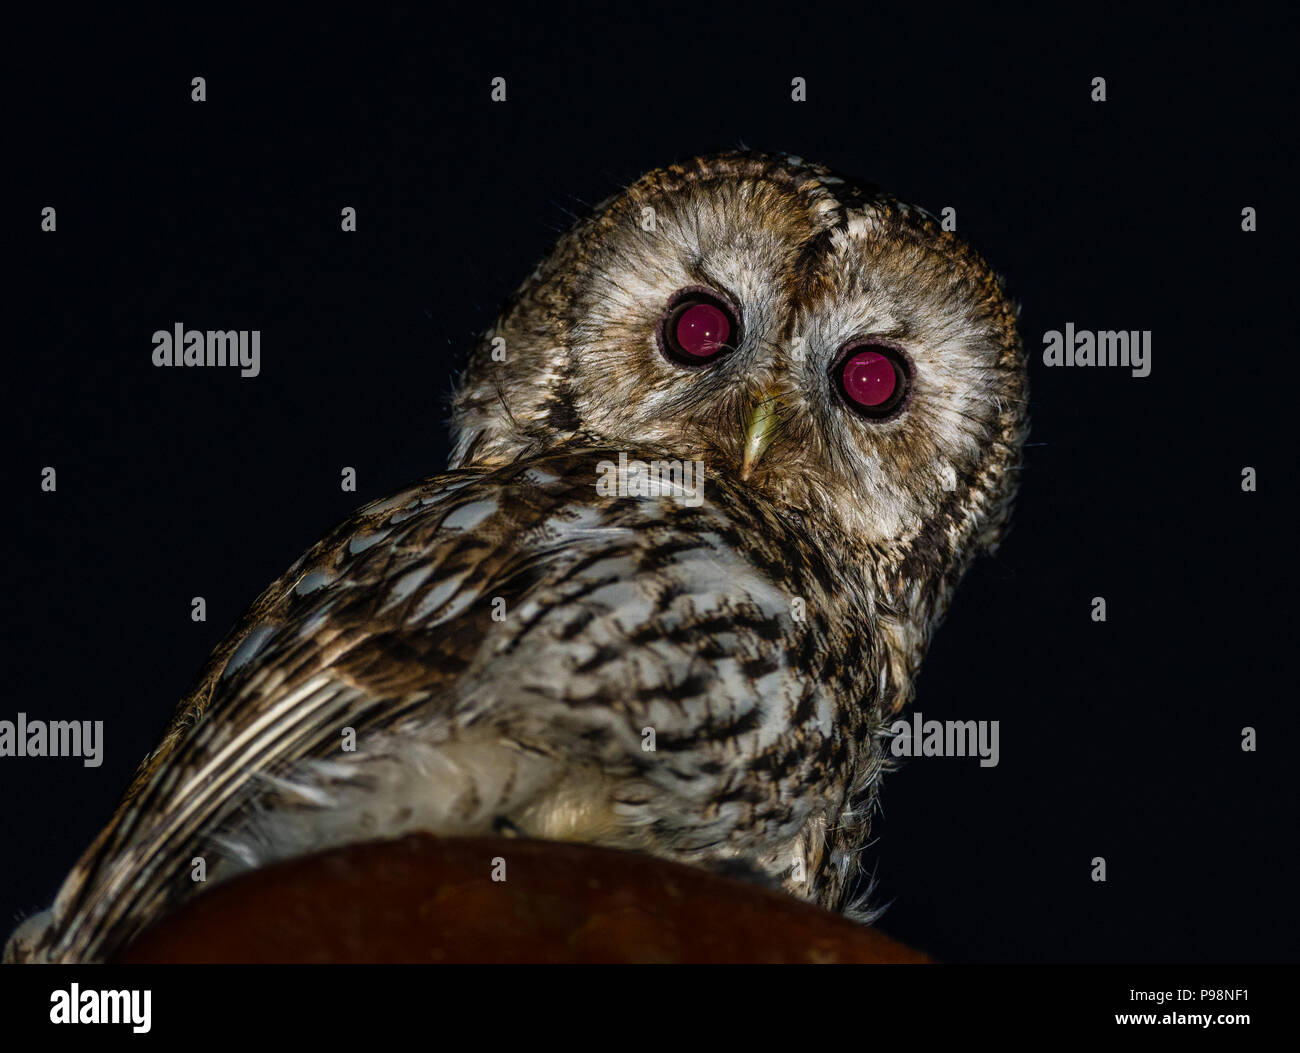 Tawny owl at night Stock Photo